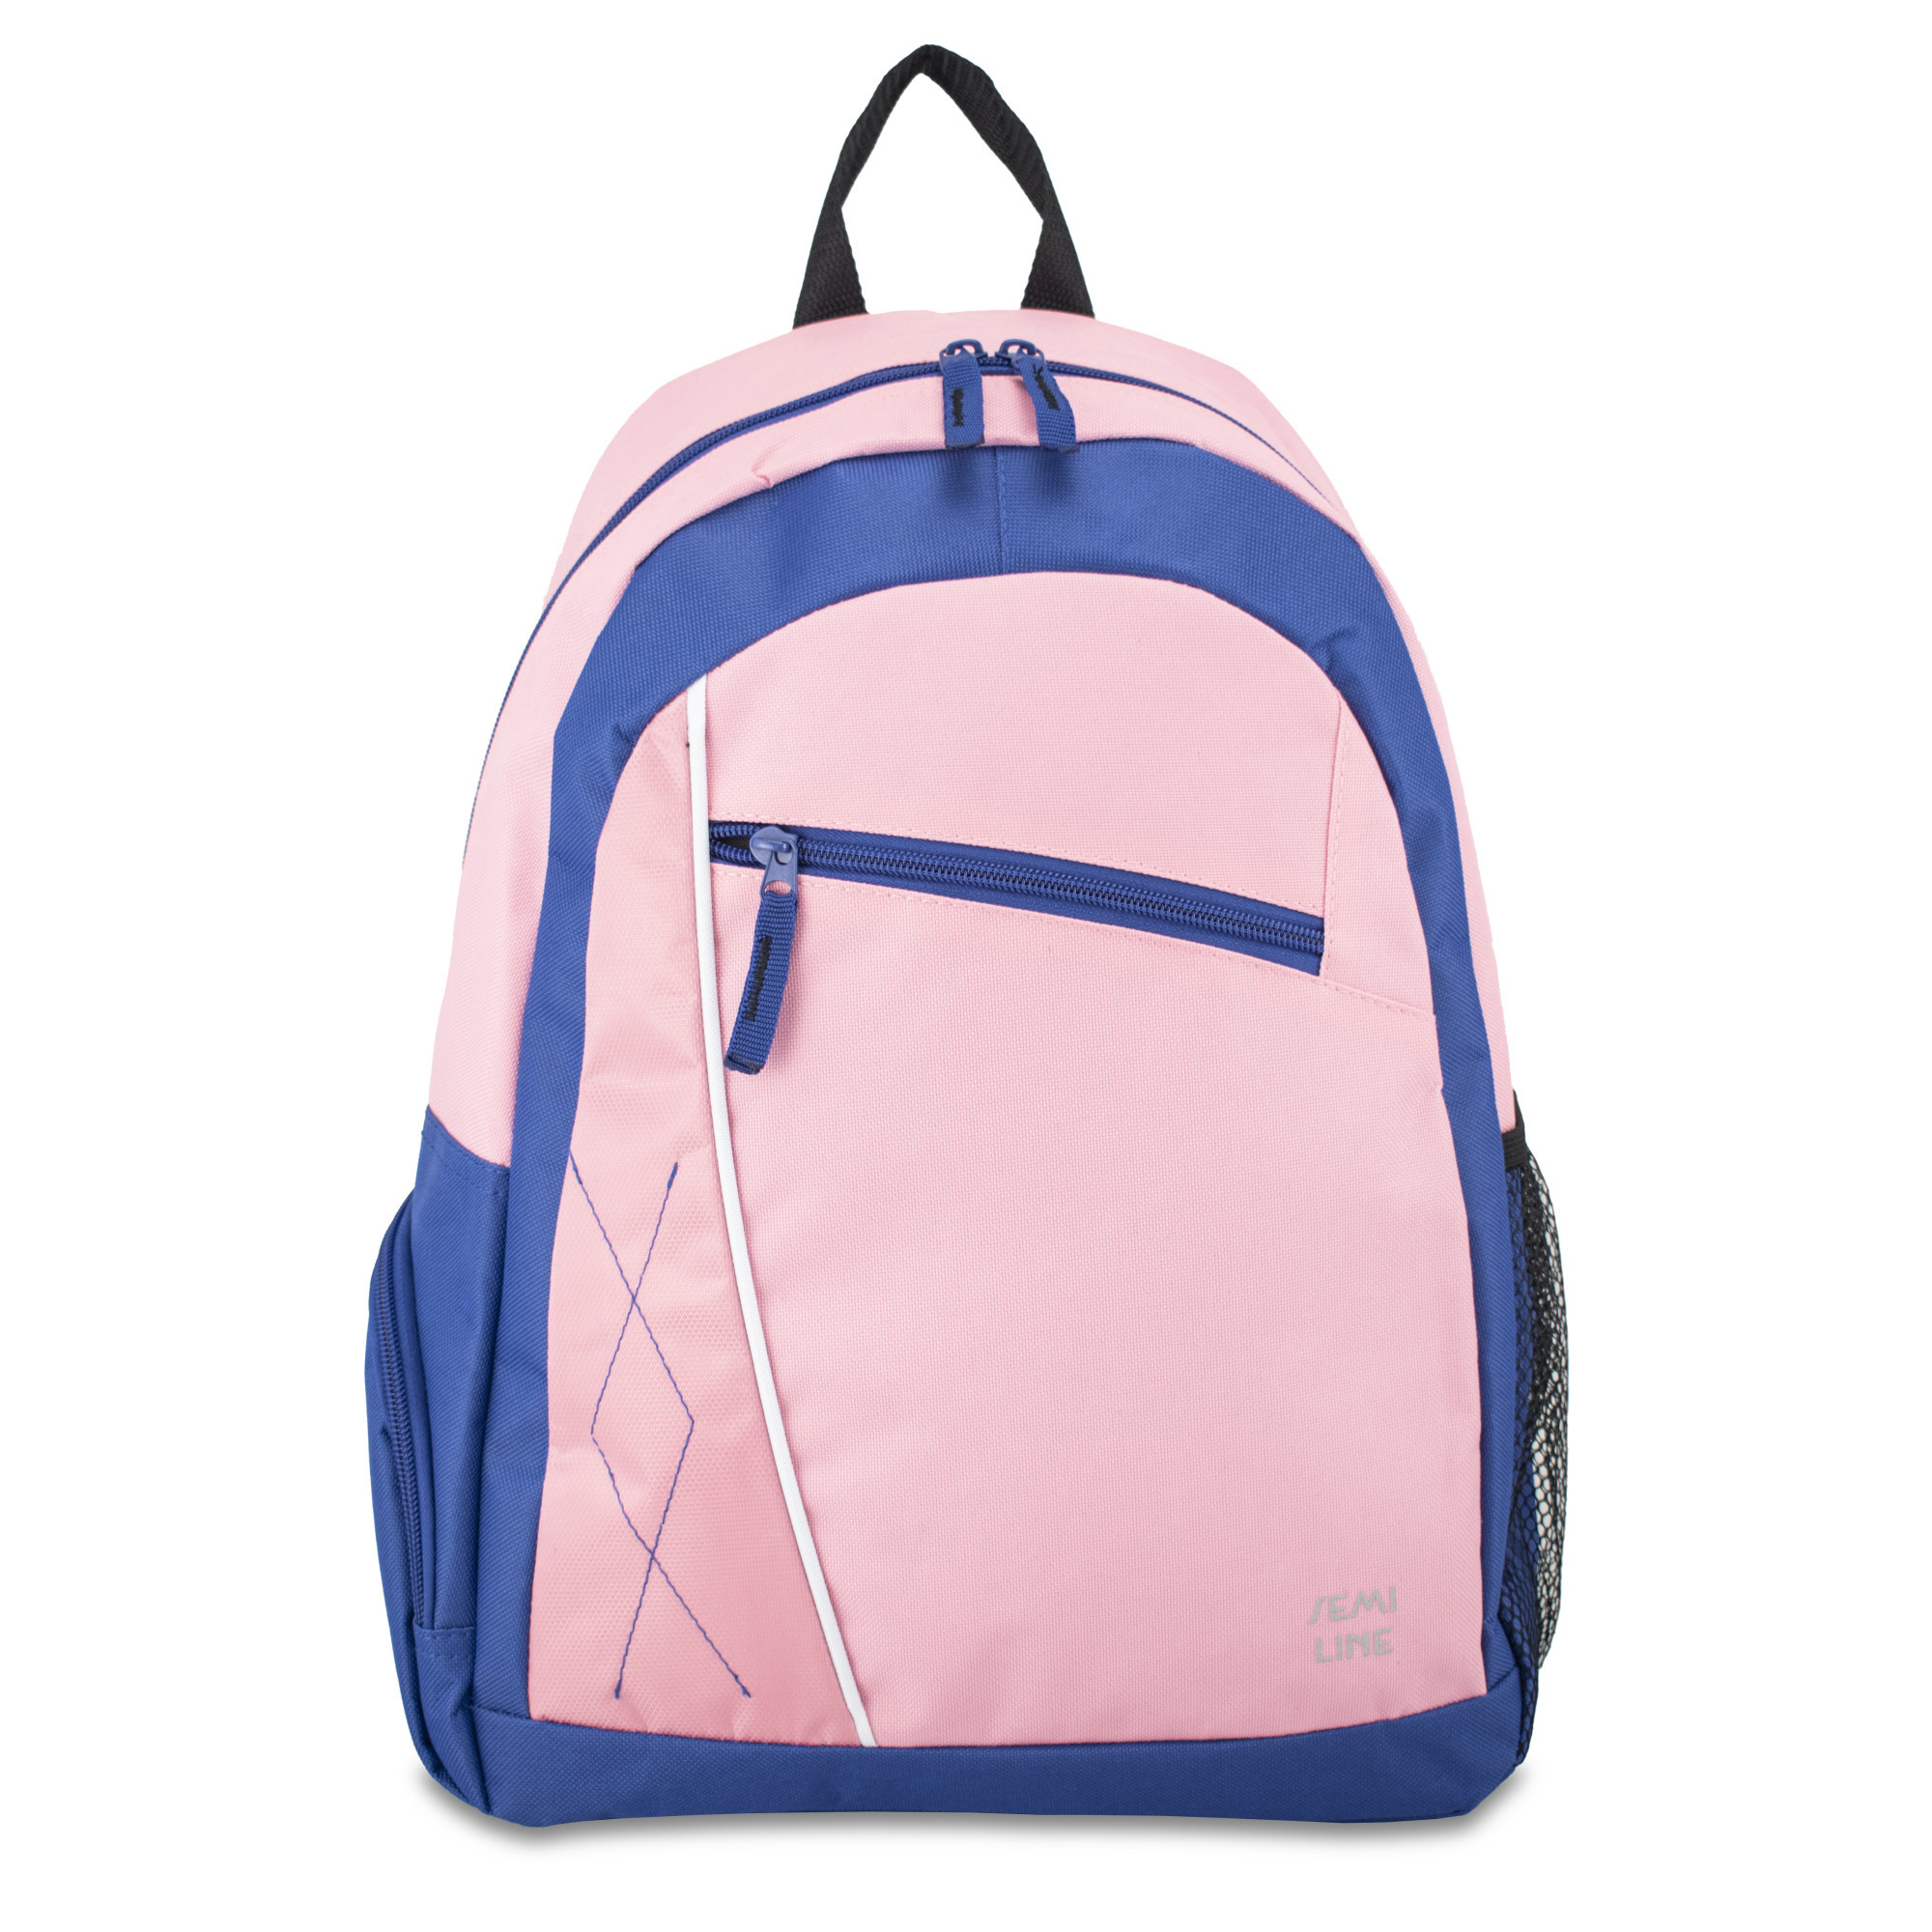 Školní batoh Semiline A3038-2 Pink/Navy Blue 43 cm x 30 cm x 15 cm